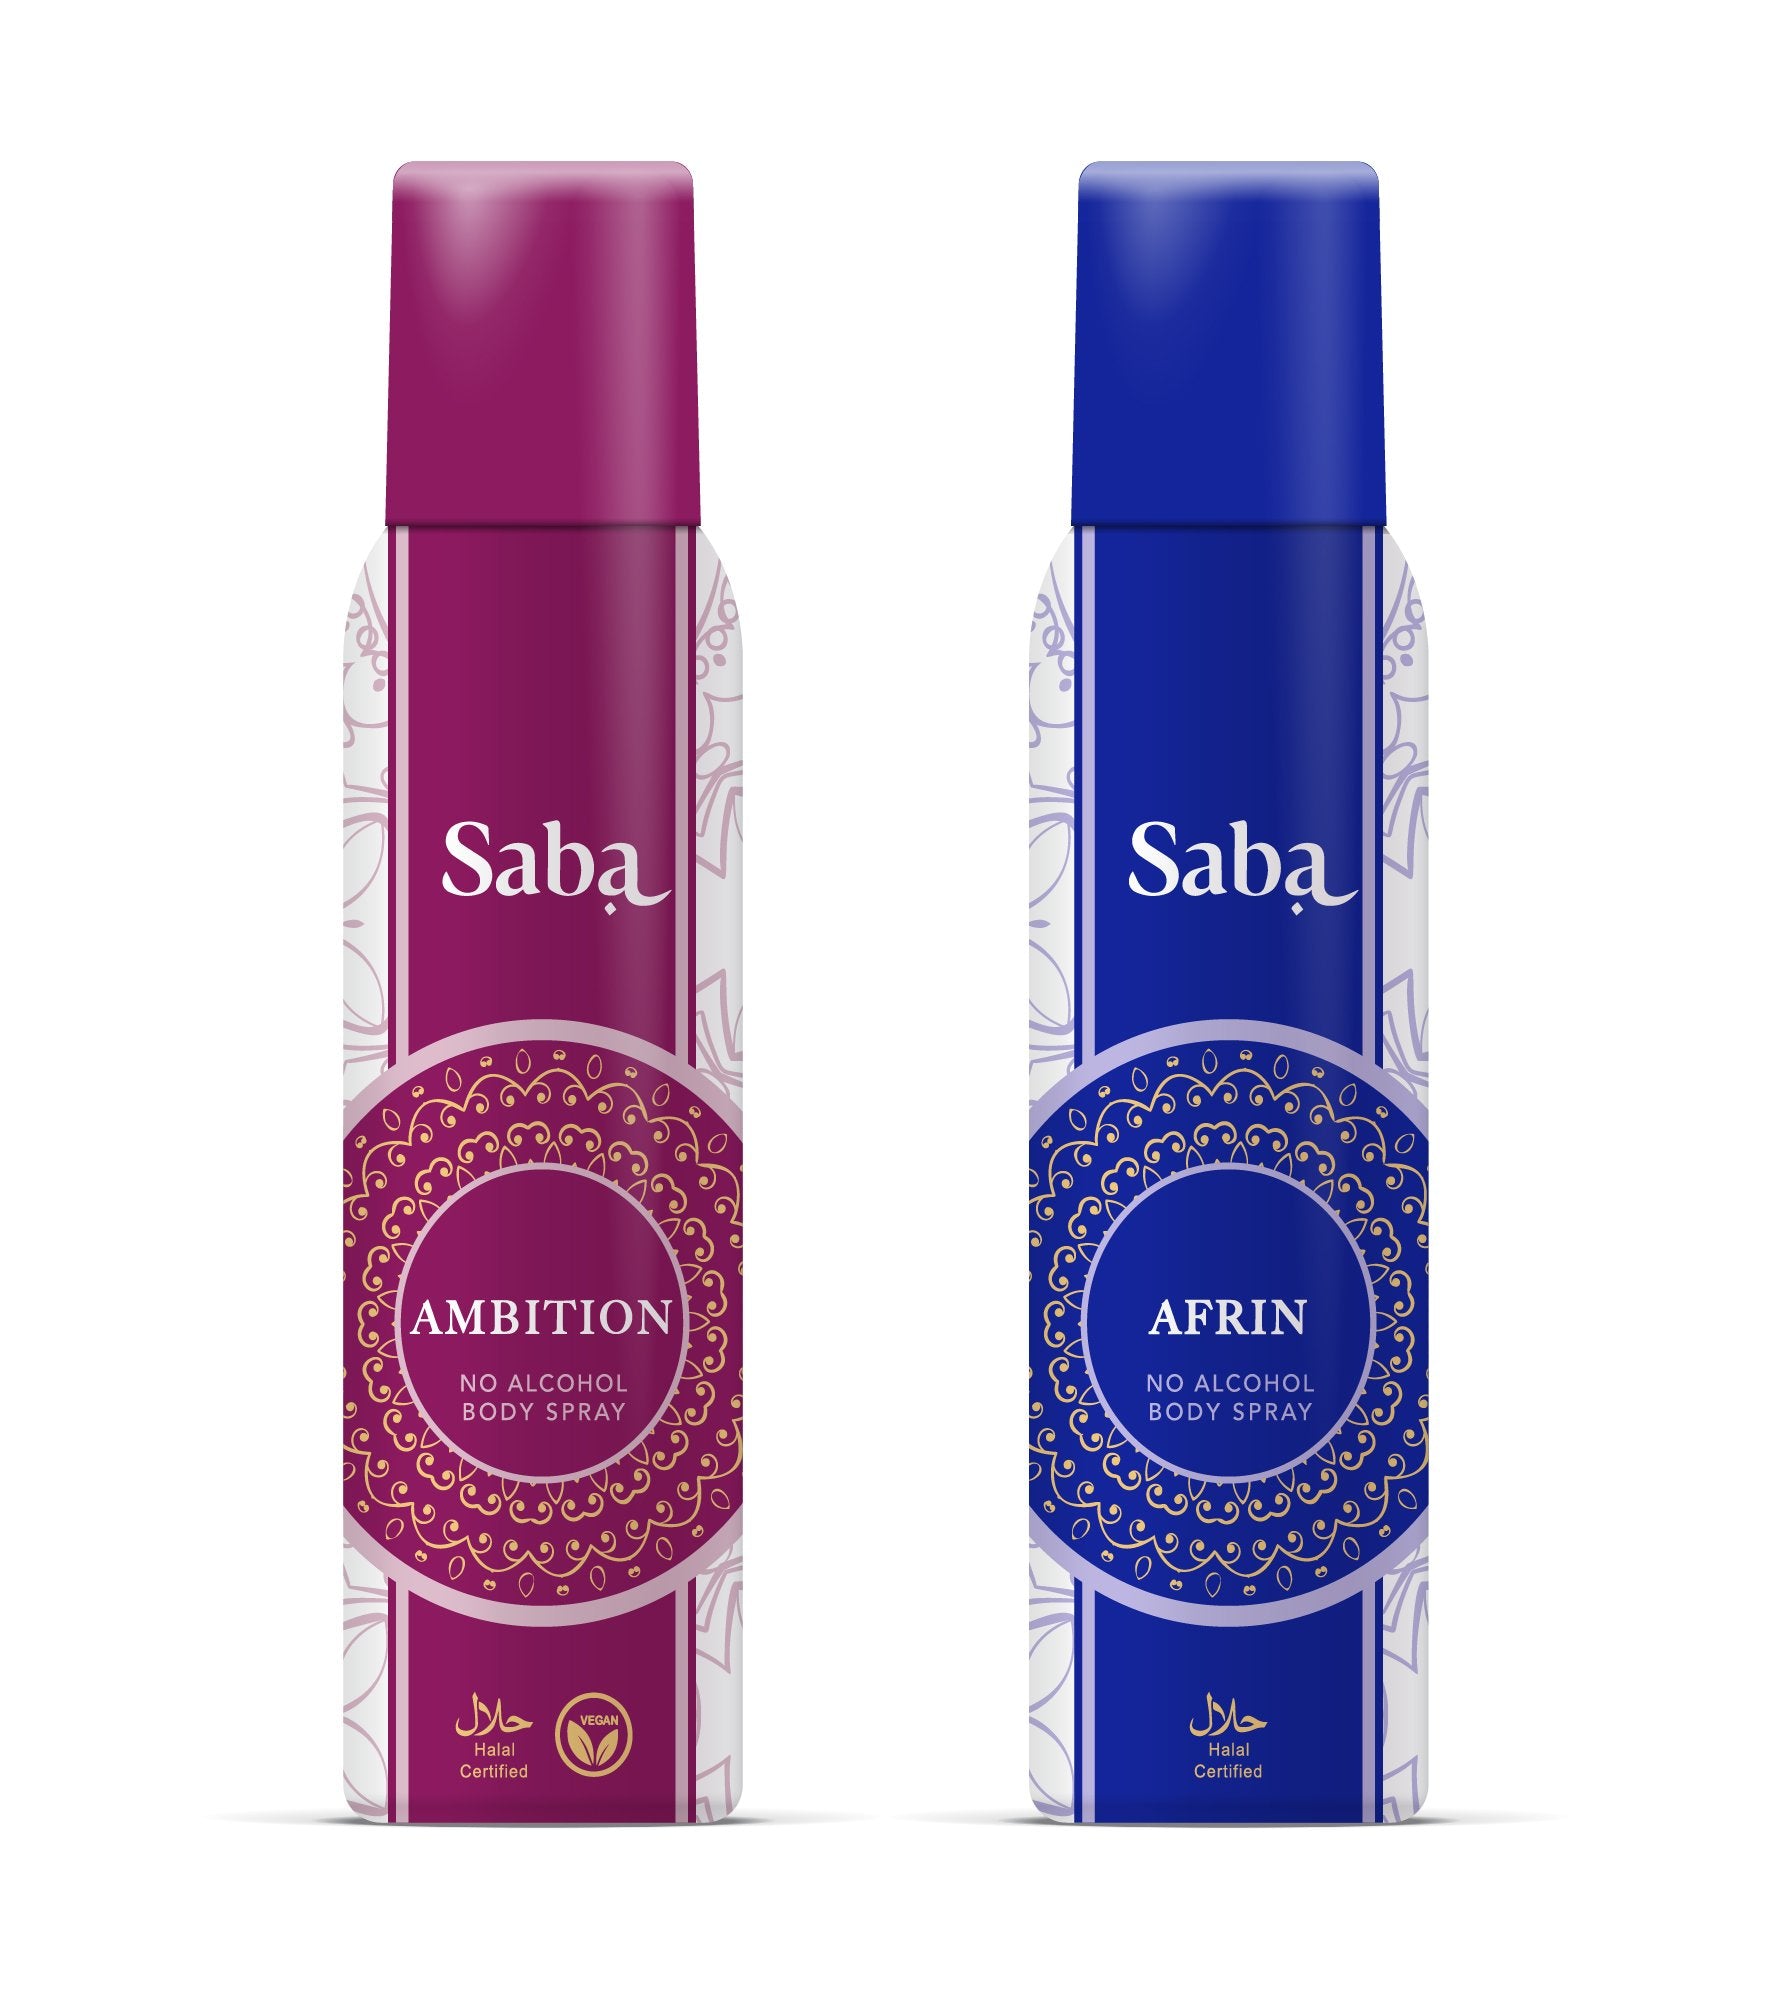 Saba Afrin & Saba Ambition Combo with Saba Daily Moisturizing Turmeric and Almond Soap Free Facewash Free